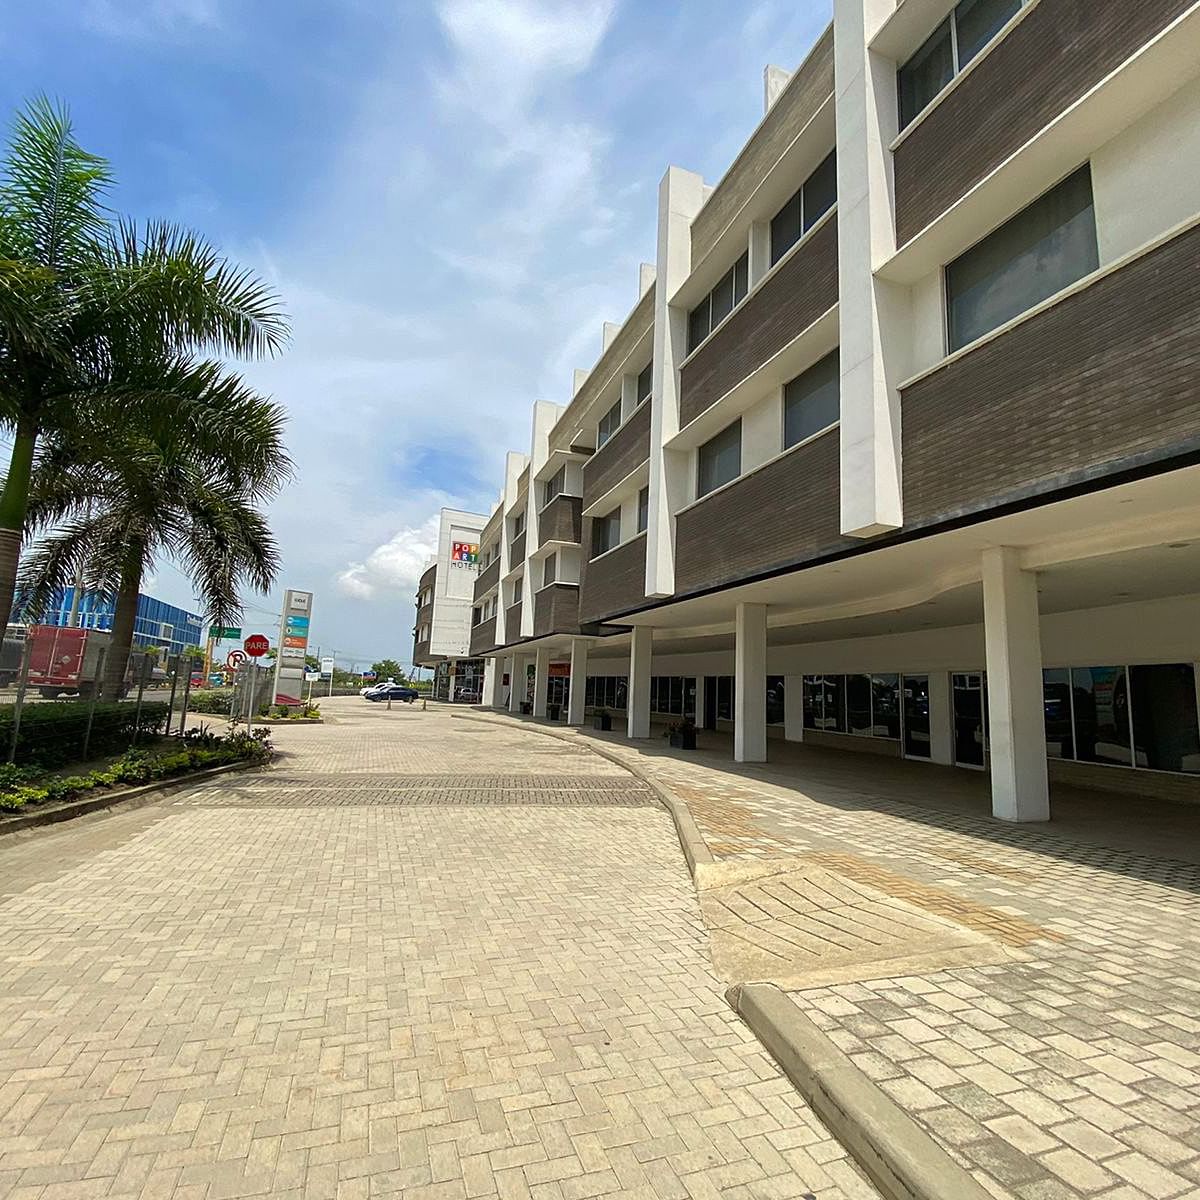 Exterior view of the Hotel CLC Mamonal Cartagena